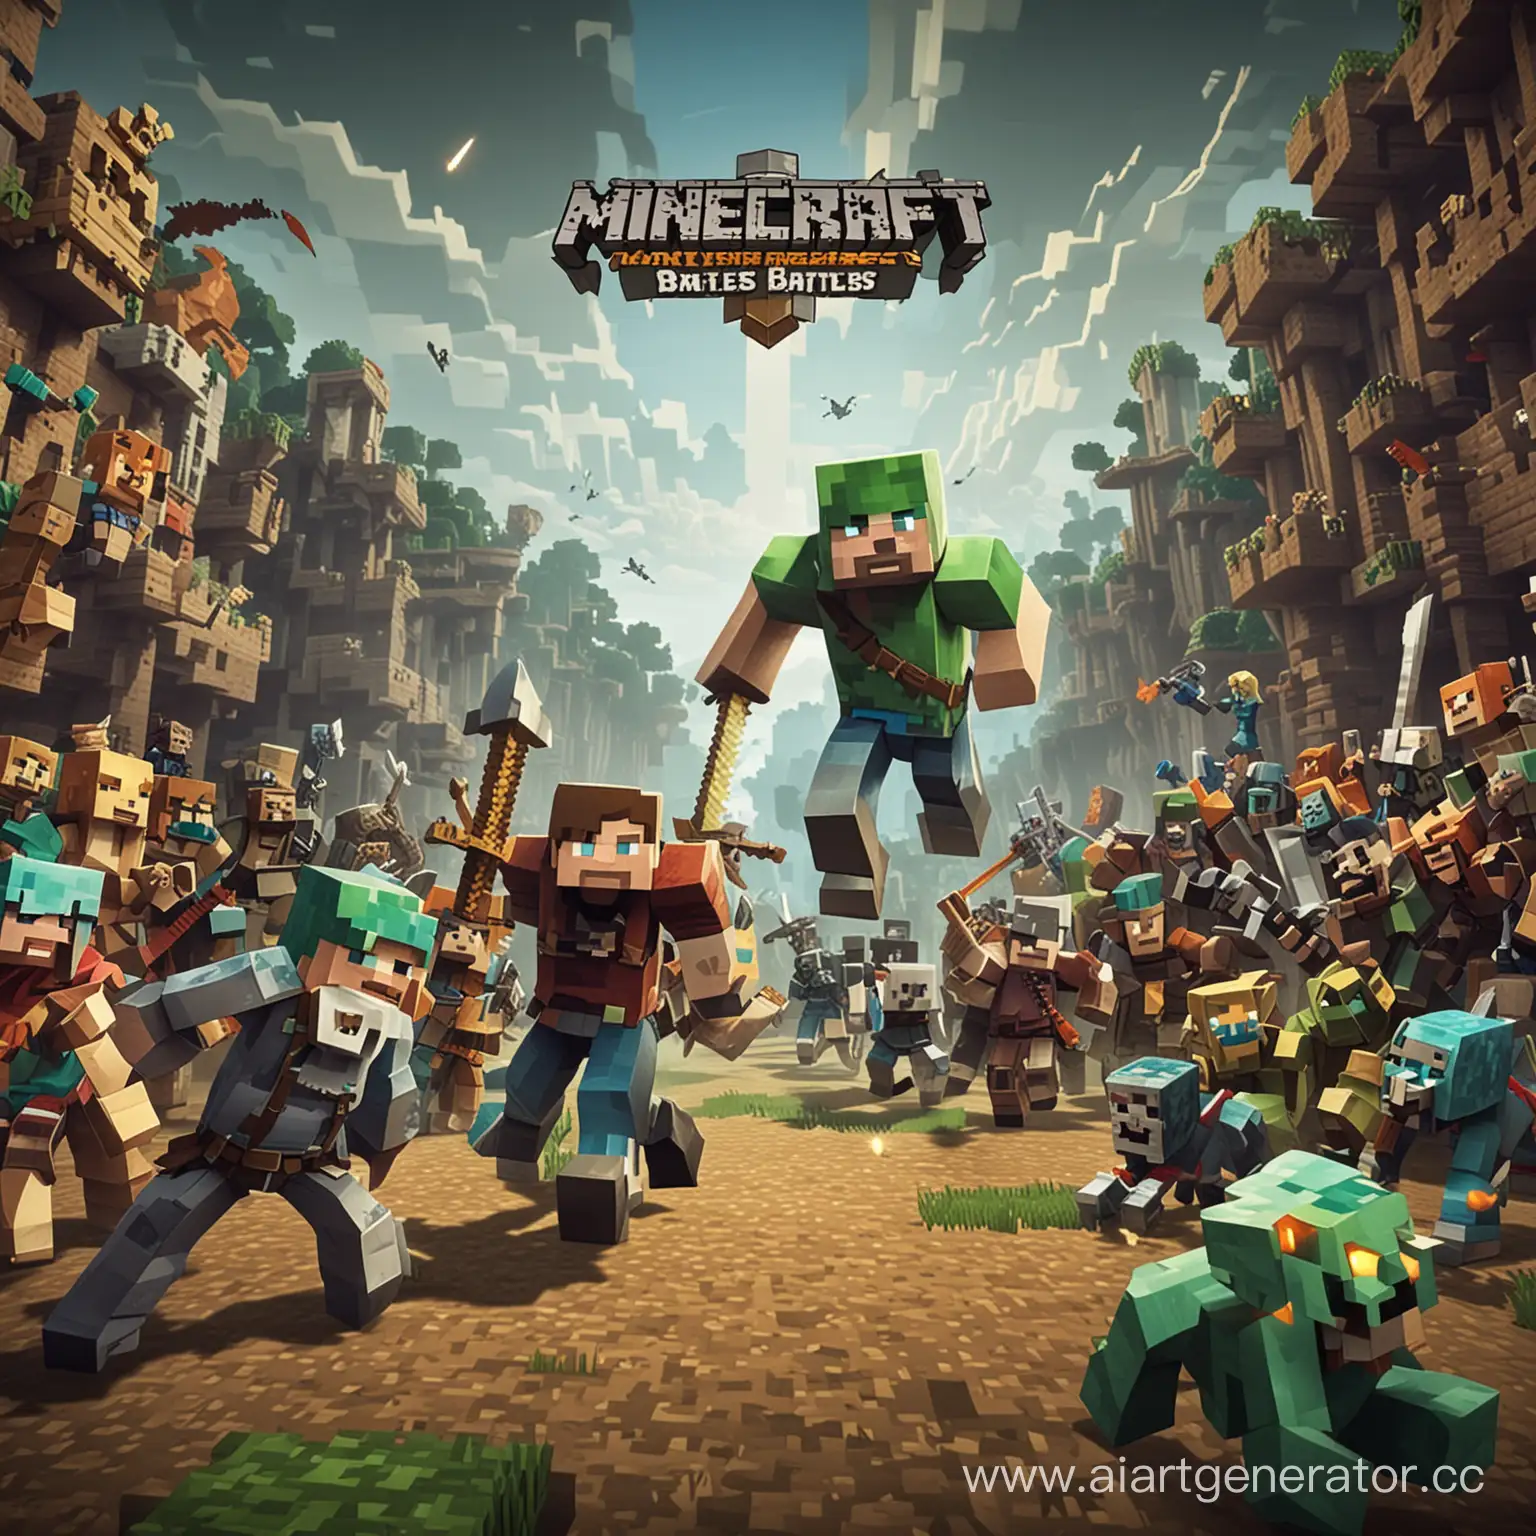 Epic-Minecraft-Battle-Scene-Intense-Action-and-Adventure